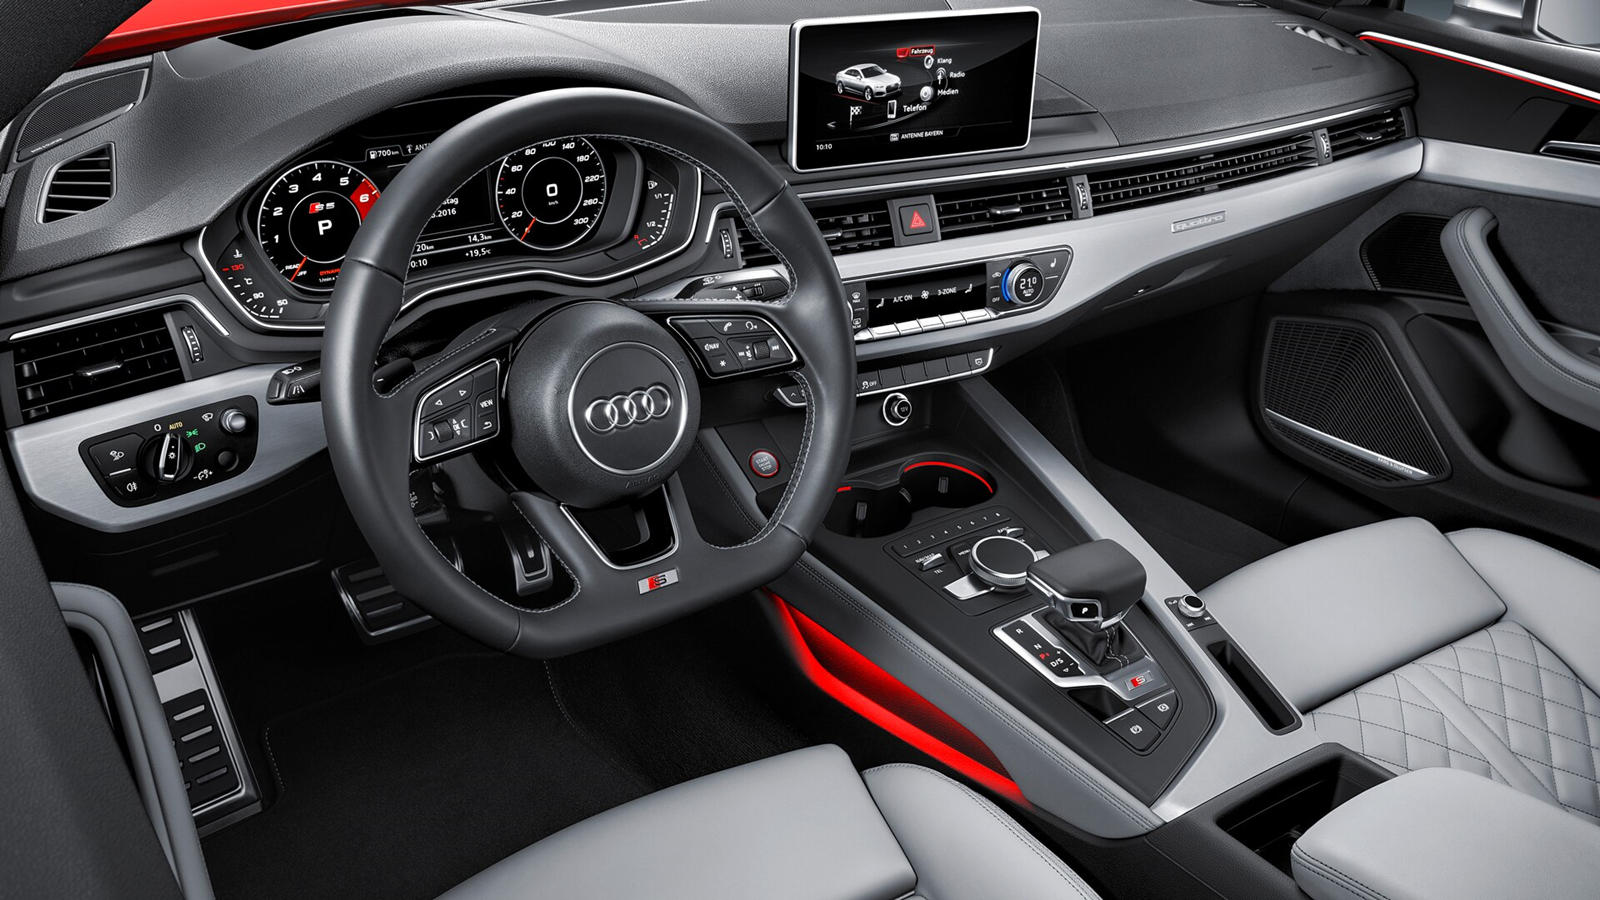 Audi S5 interior - Cockpit